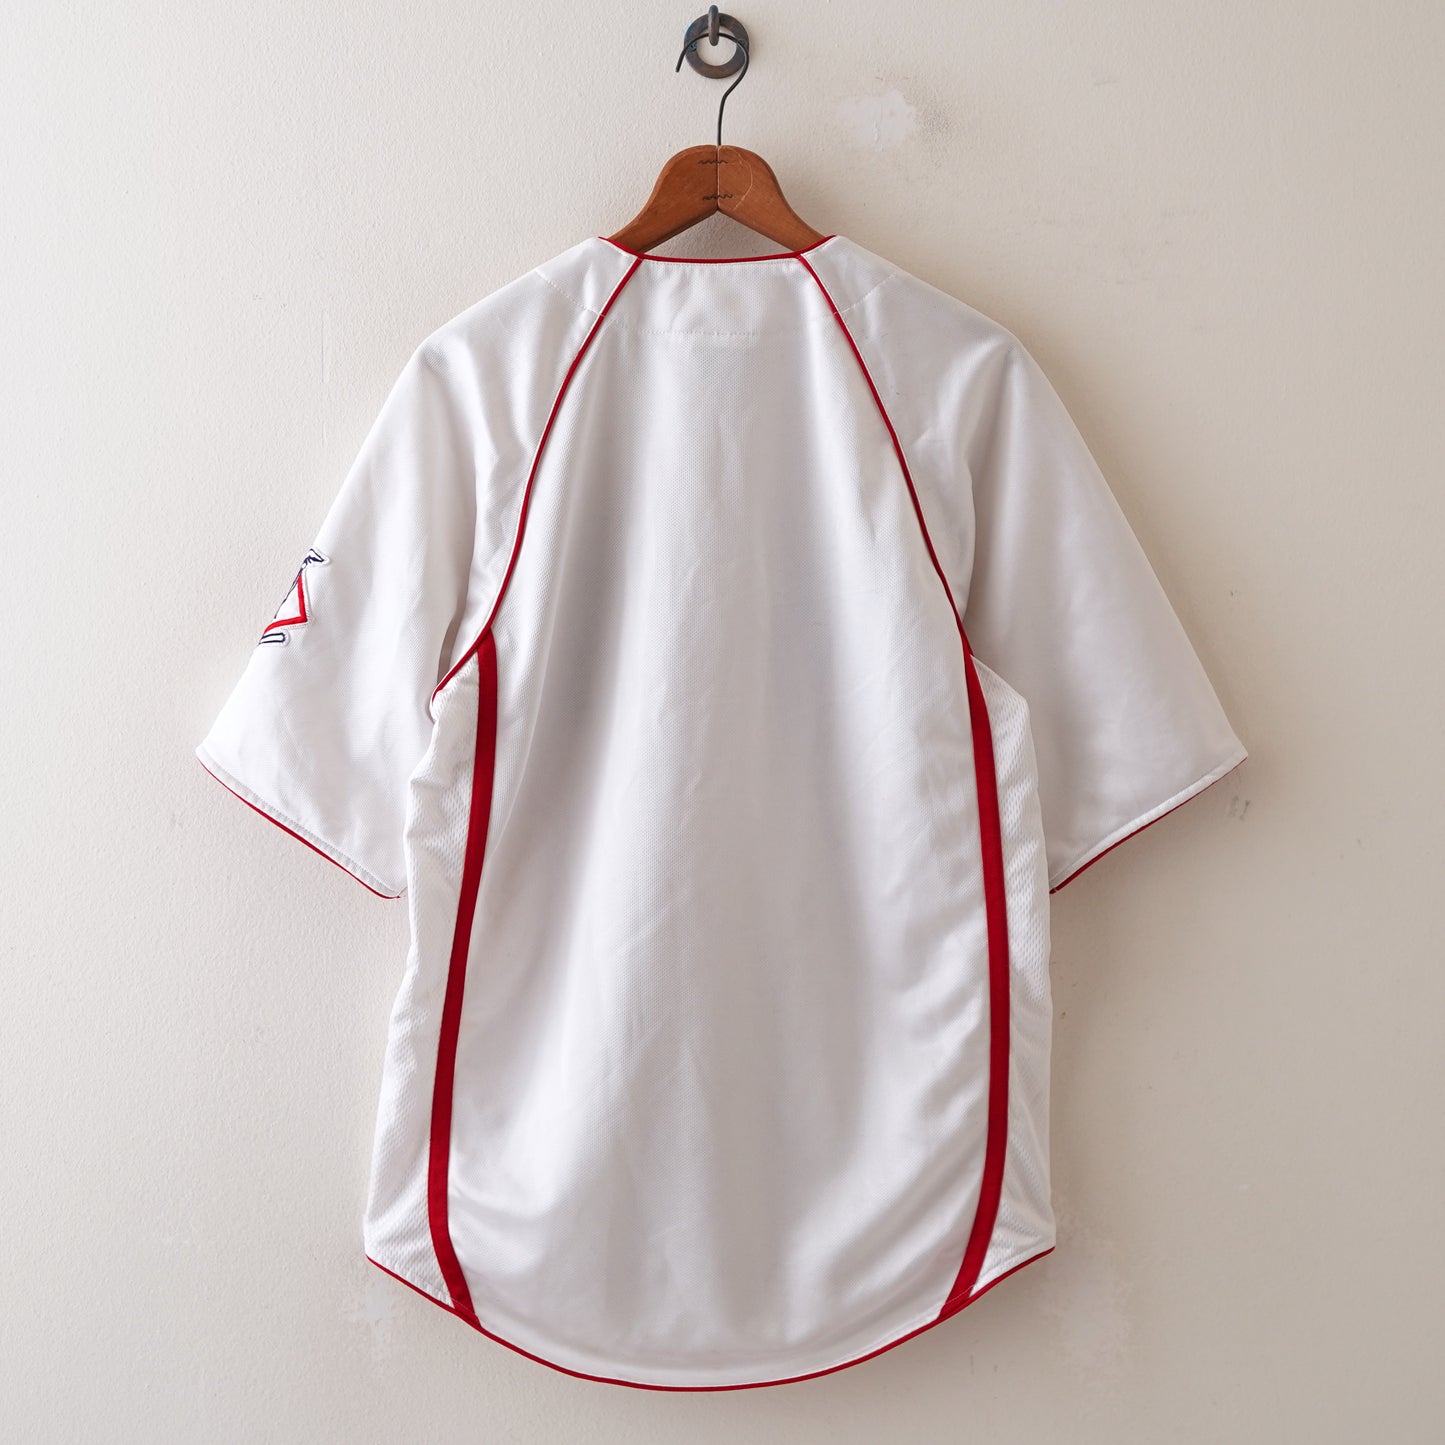 Dynasty Cardinals baseball shirt